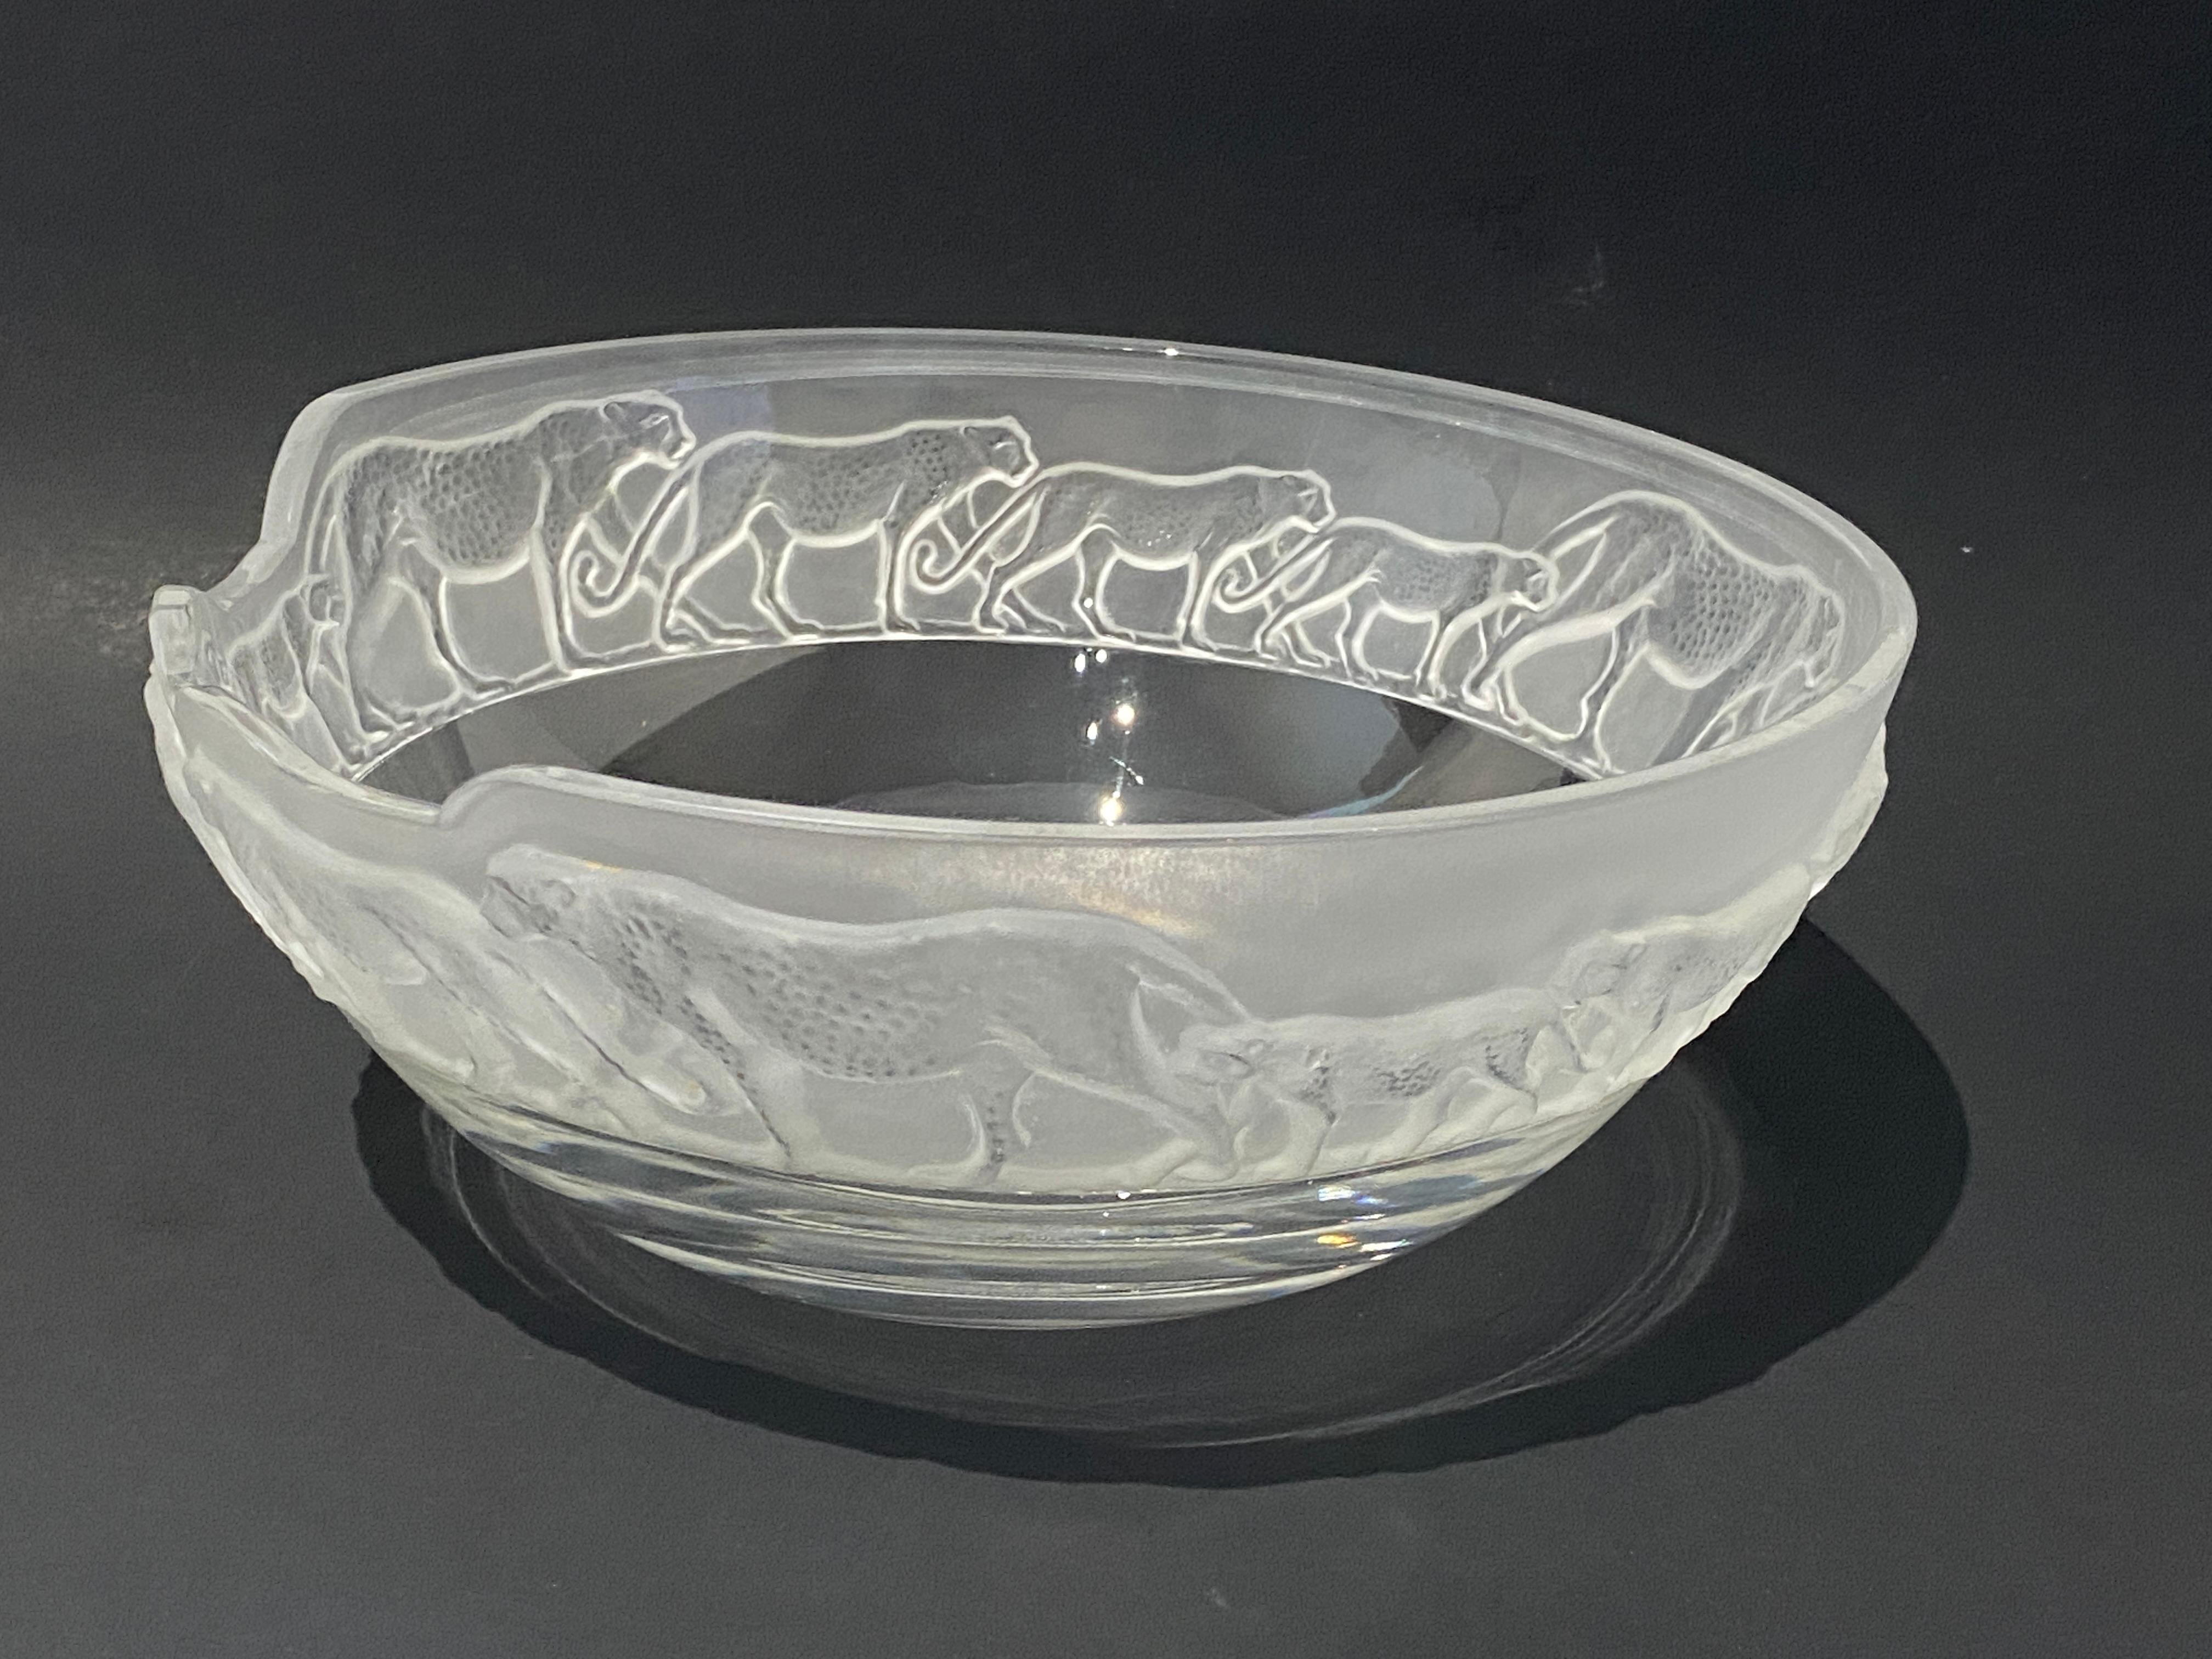 leopard print bowl